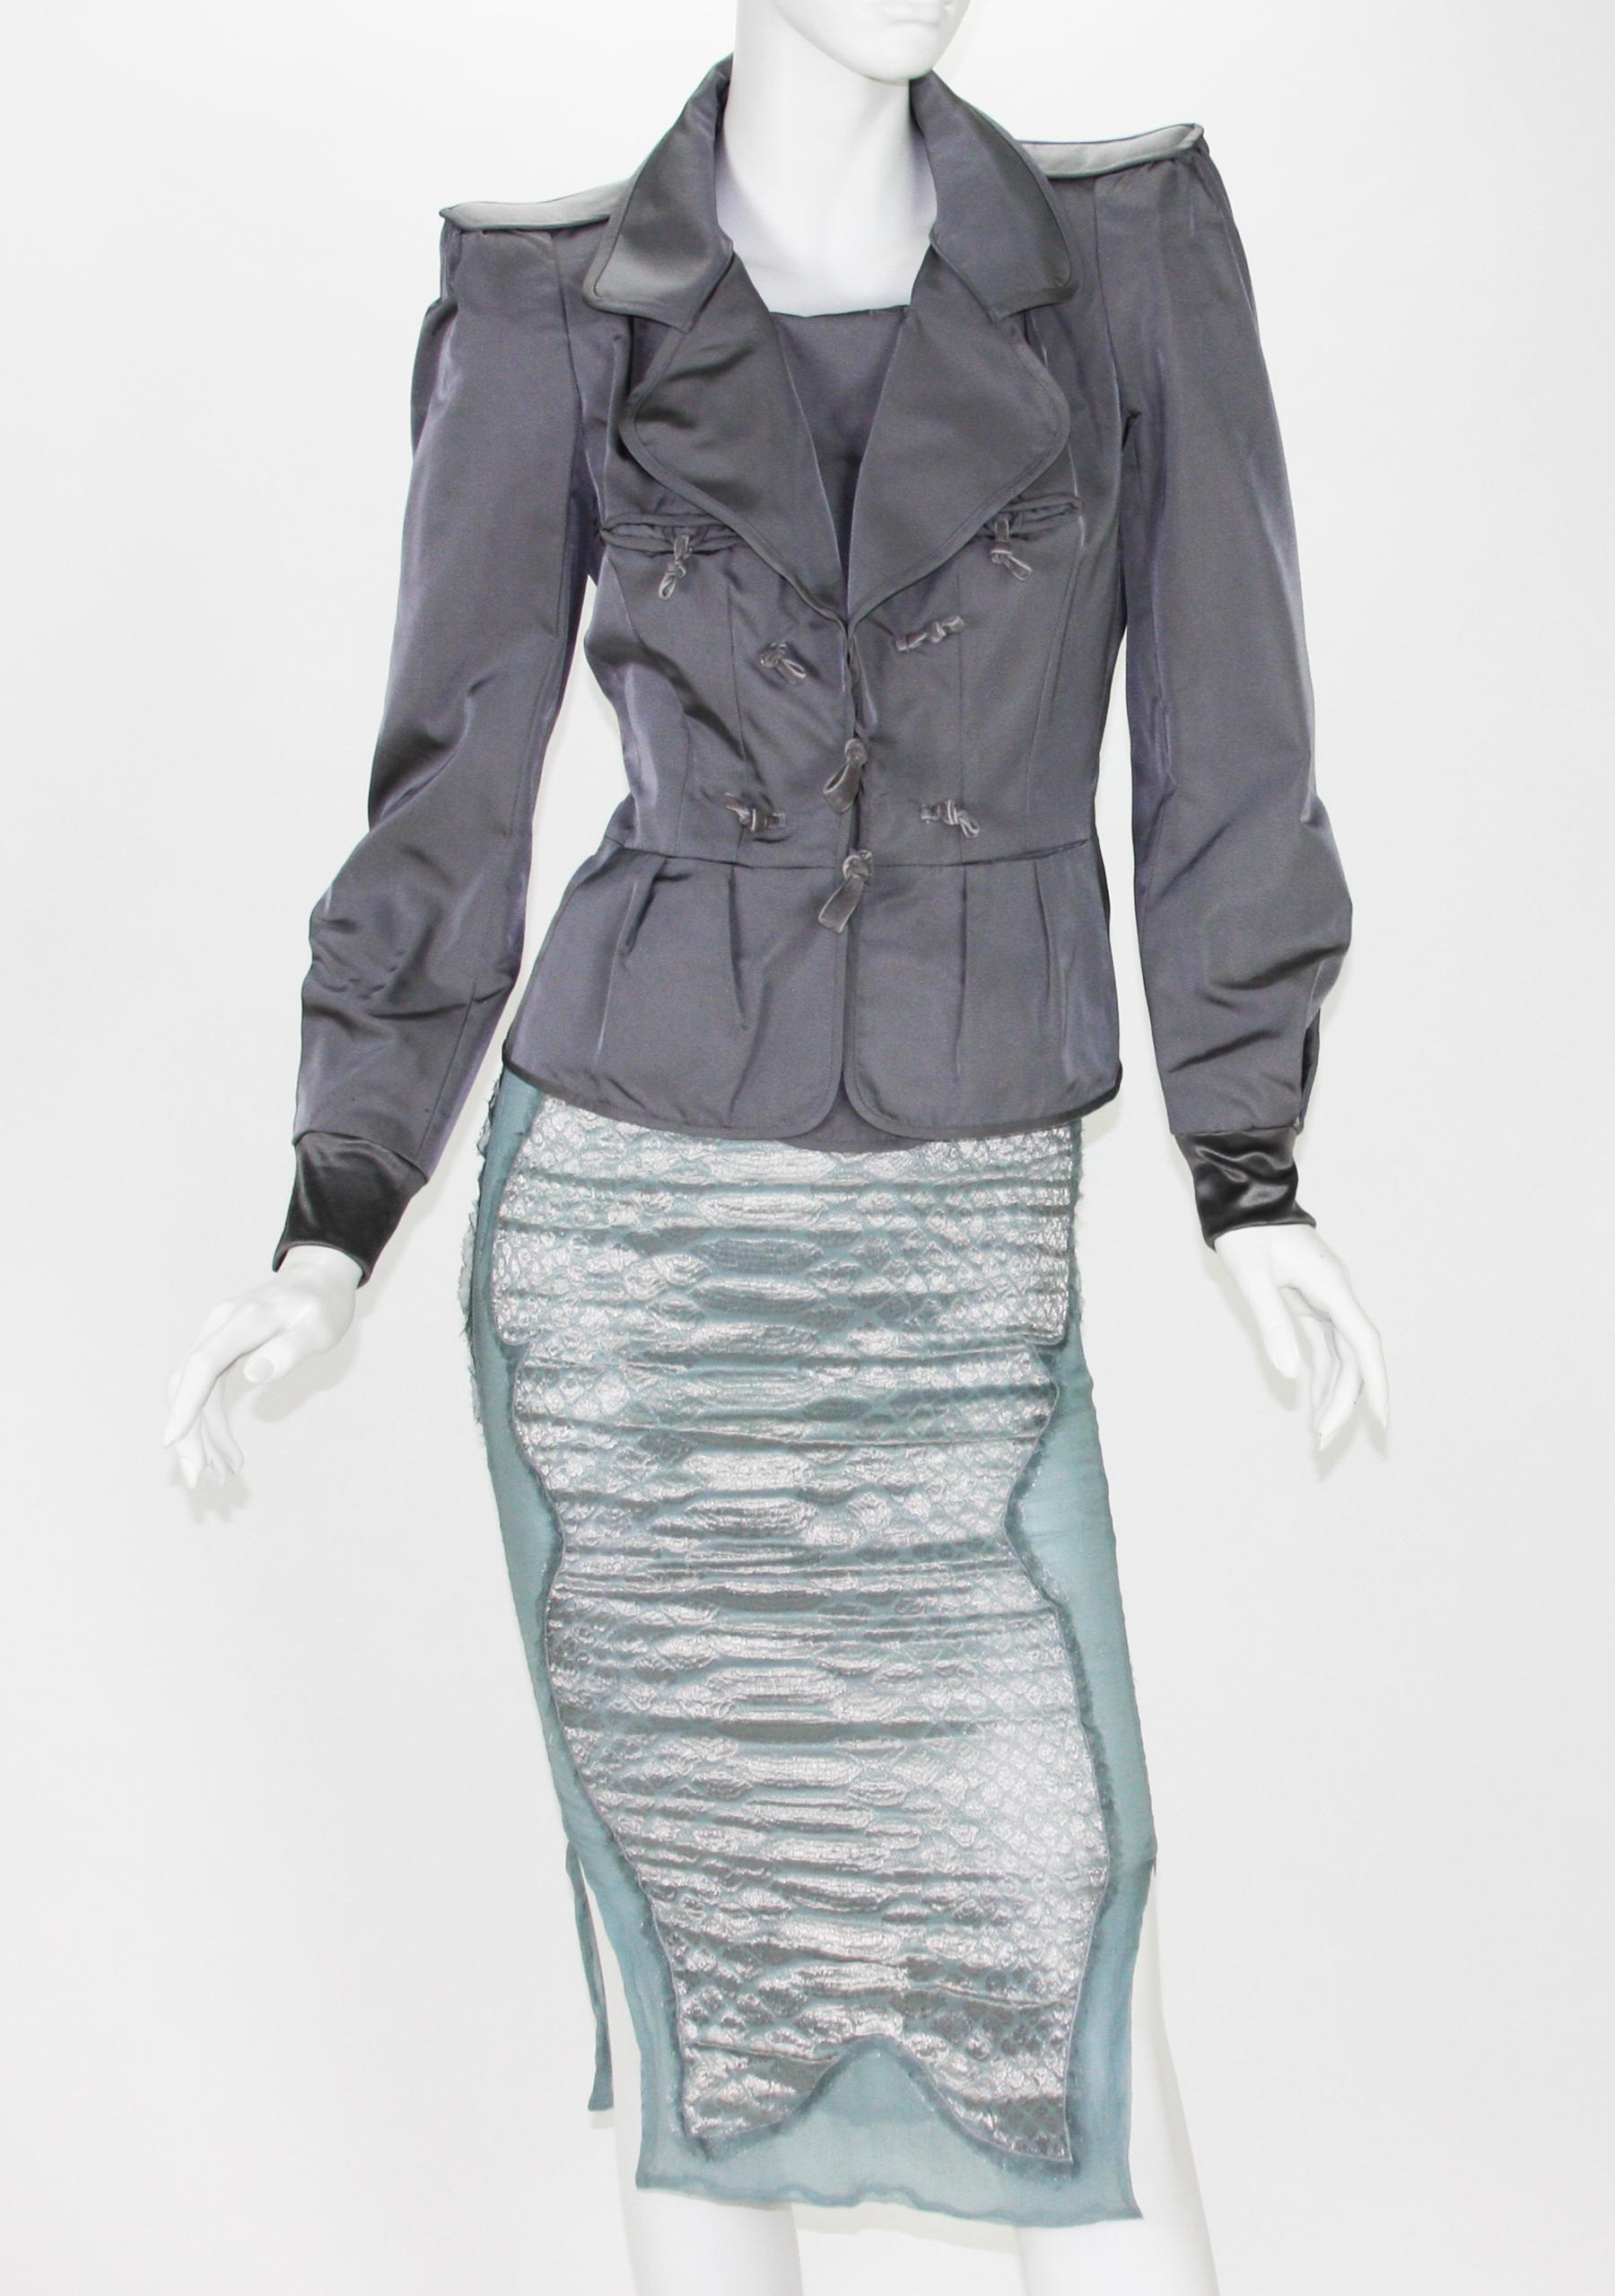 Tom Ford for Yves Saint Laurent F/W 2004 Silk Pagoda Jacket Skirt Suit Fr 38 - 6 For Sale 3